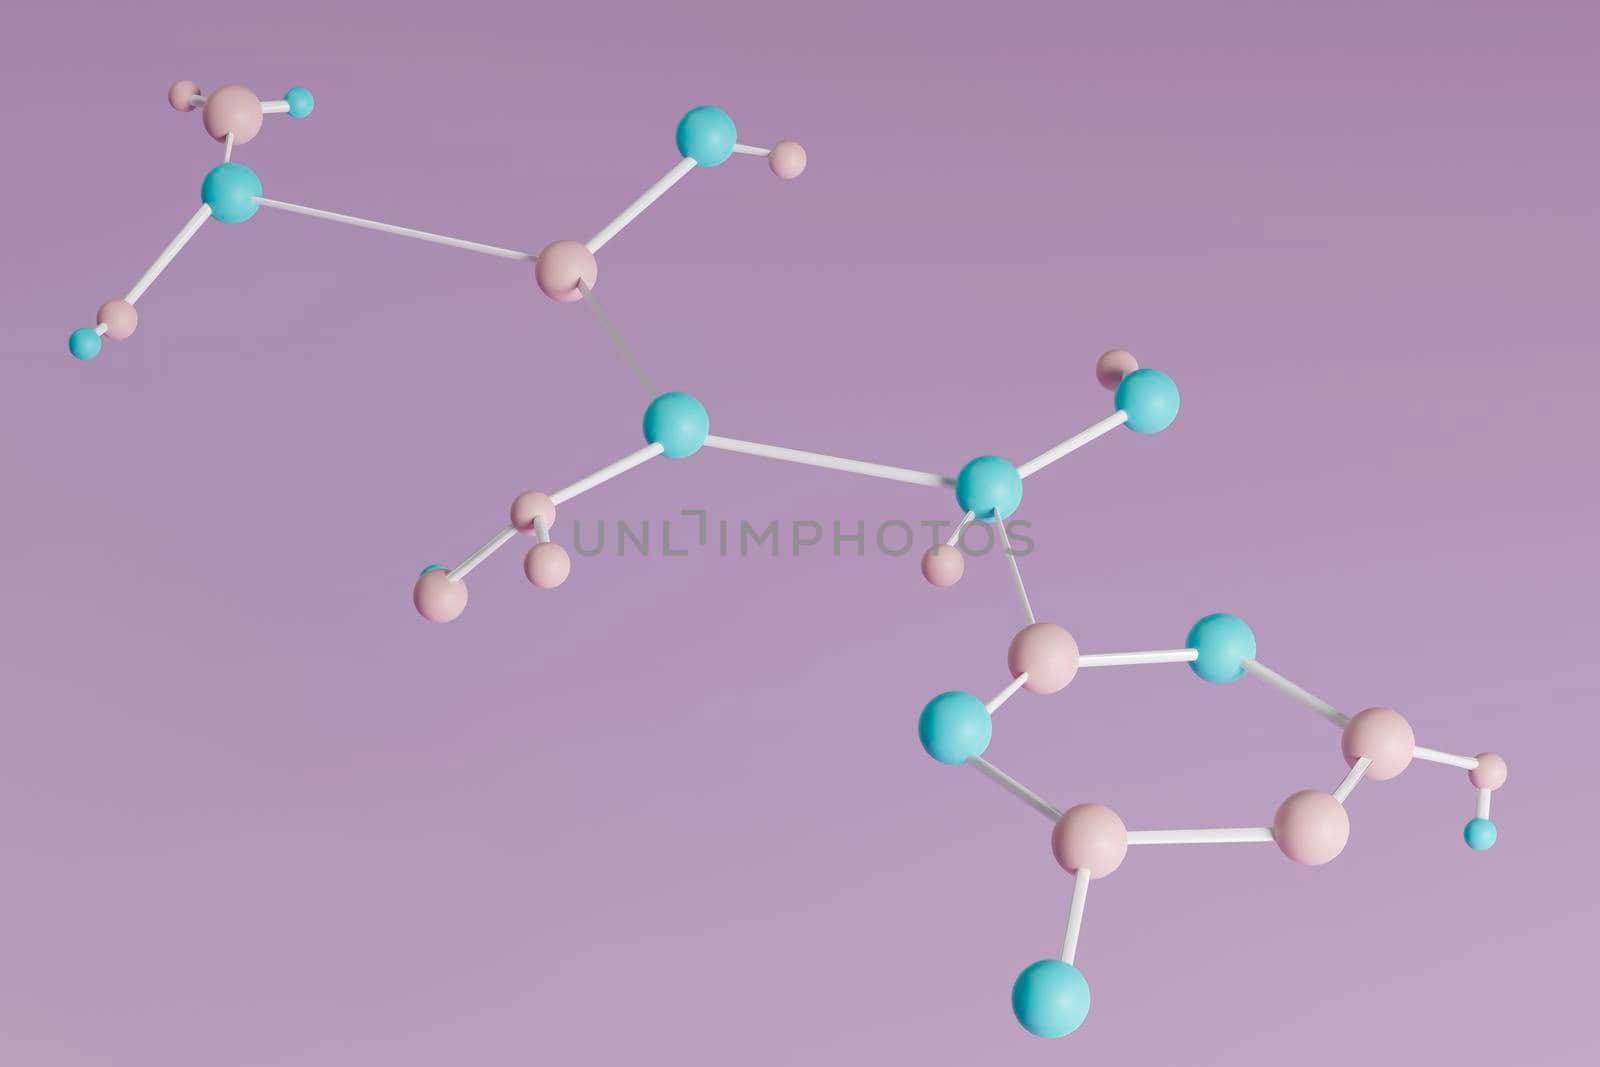 Green and pink molecule model over purple background. 3d illustration